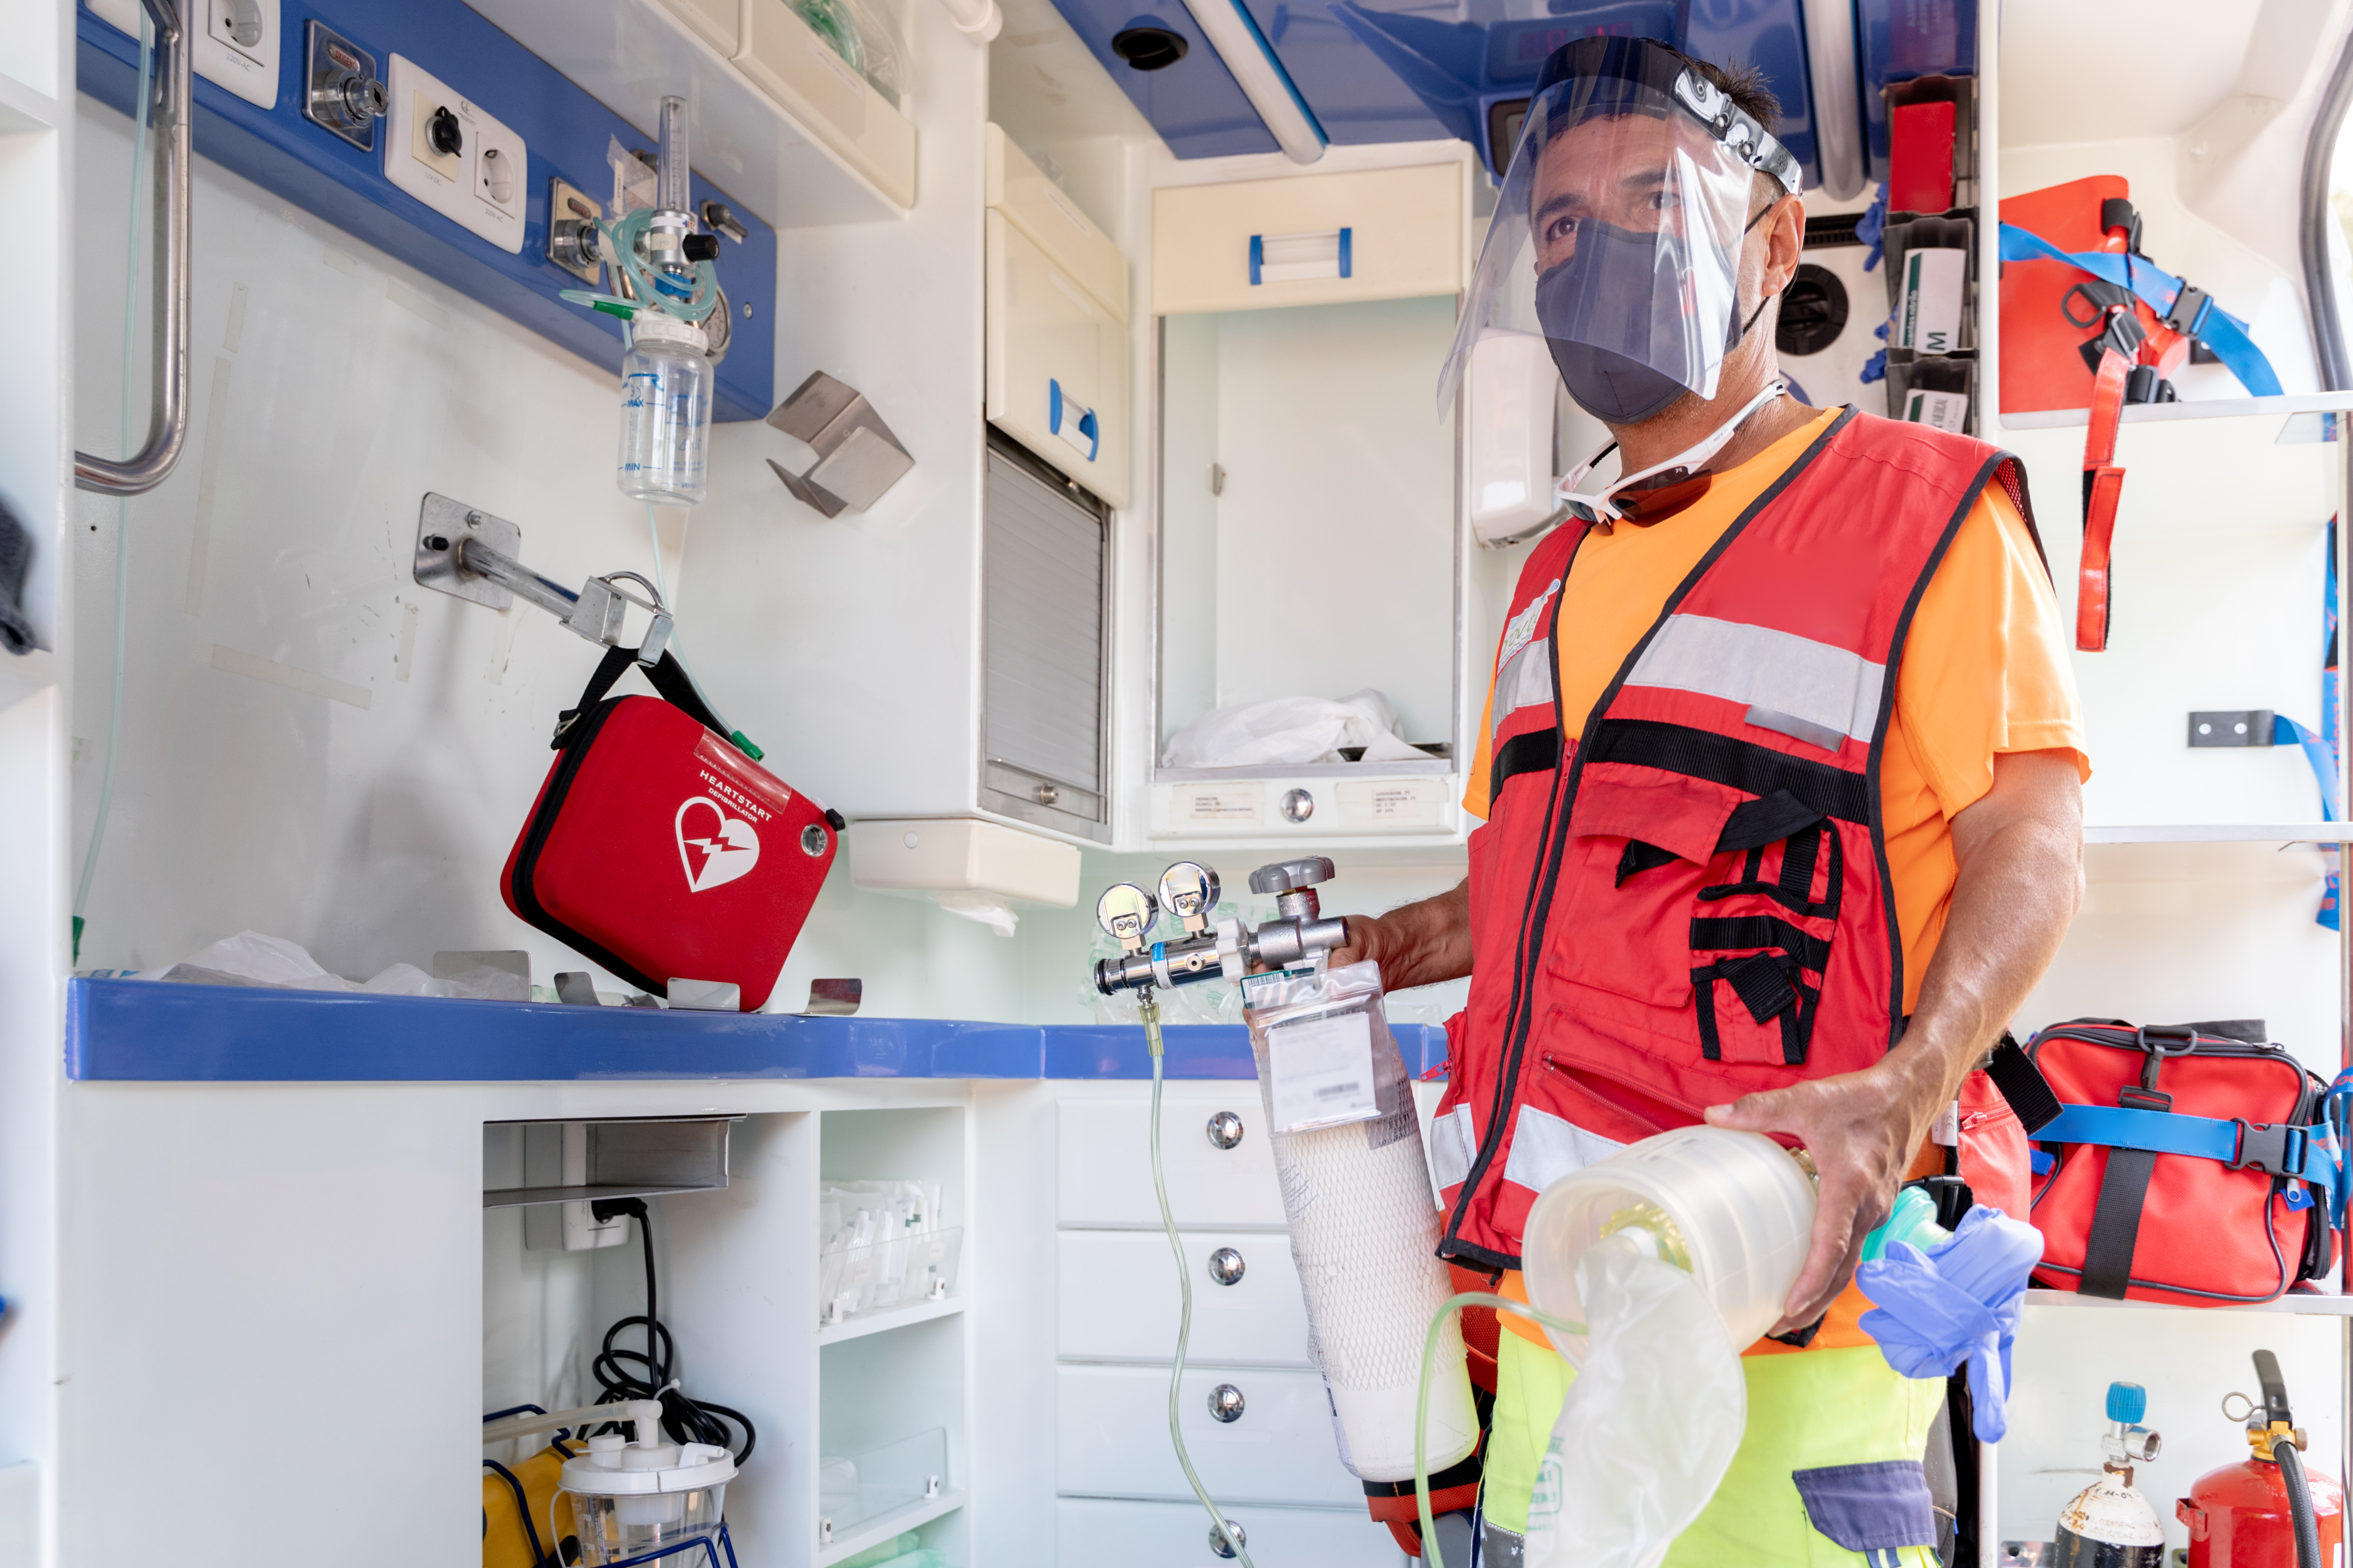 Lifeguard with facial mask working inside an ambulance